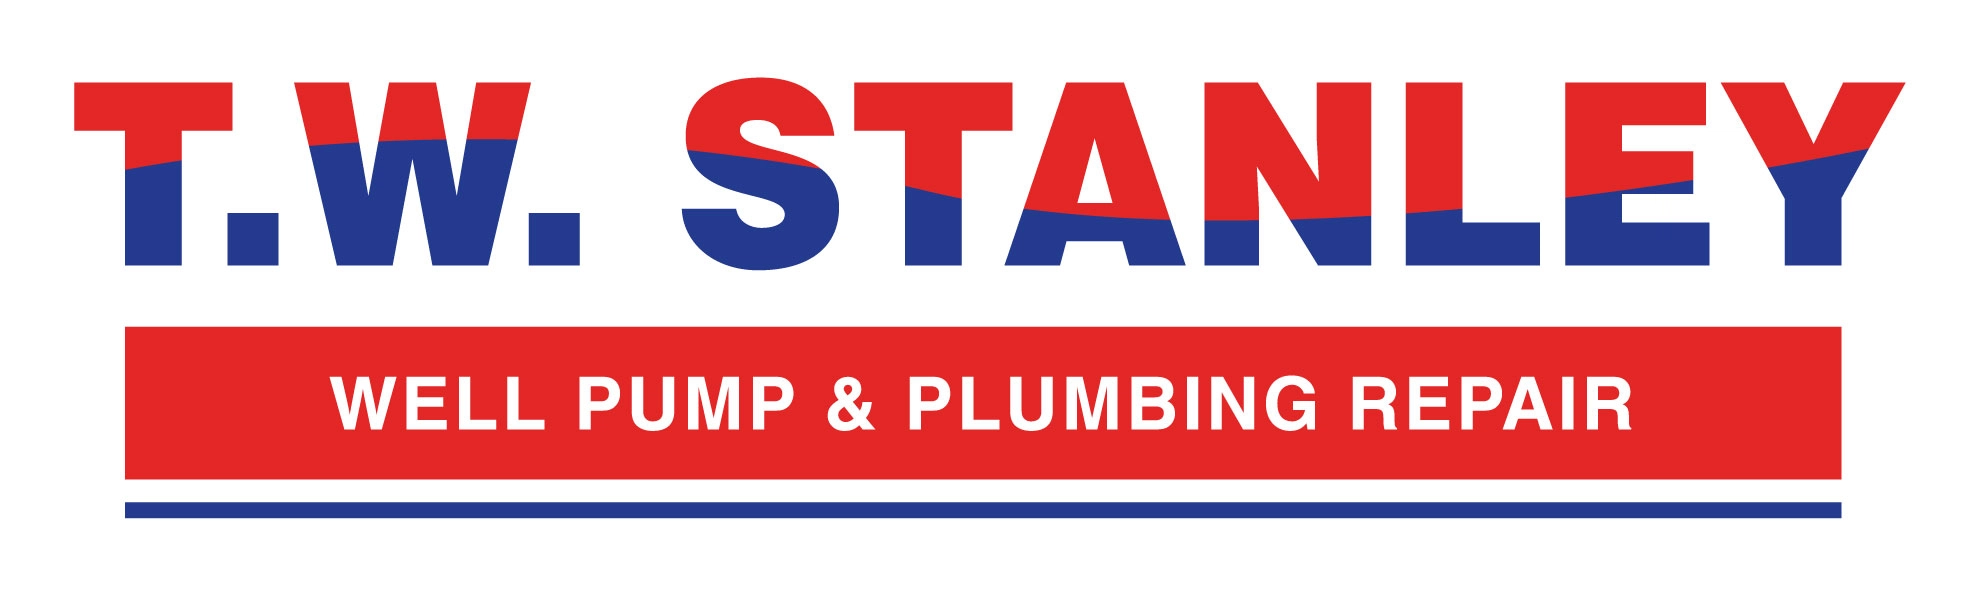 T. W. Stanley & Son Well Pump & Plumbing Repair Logo